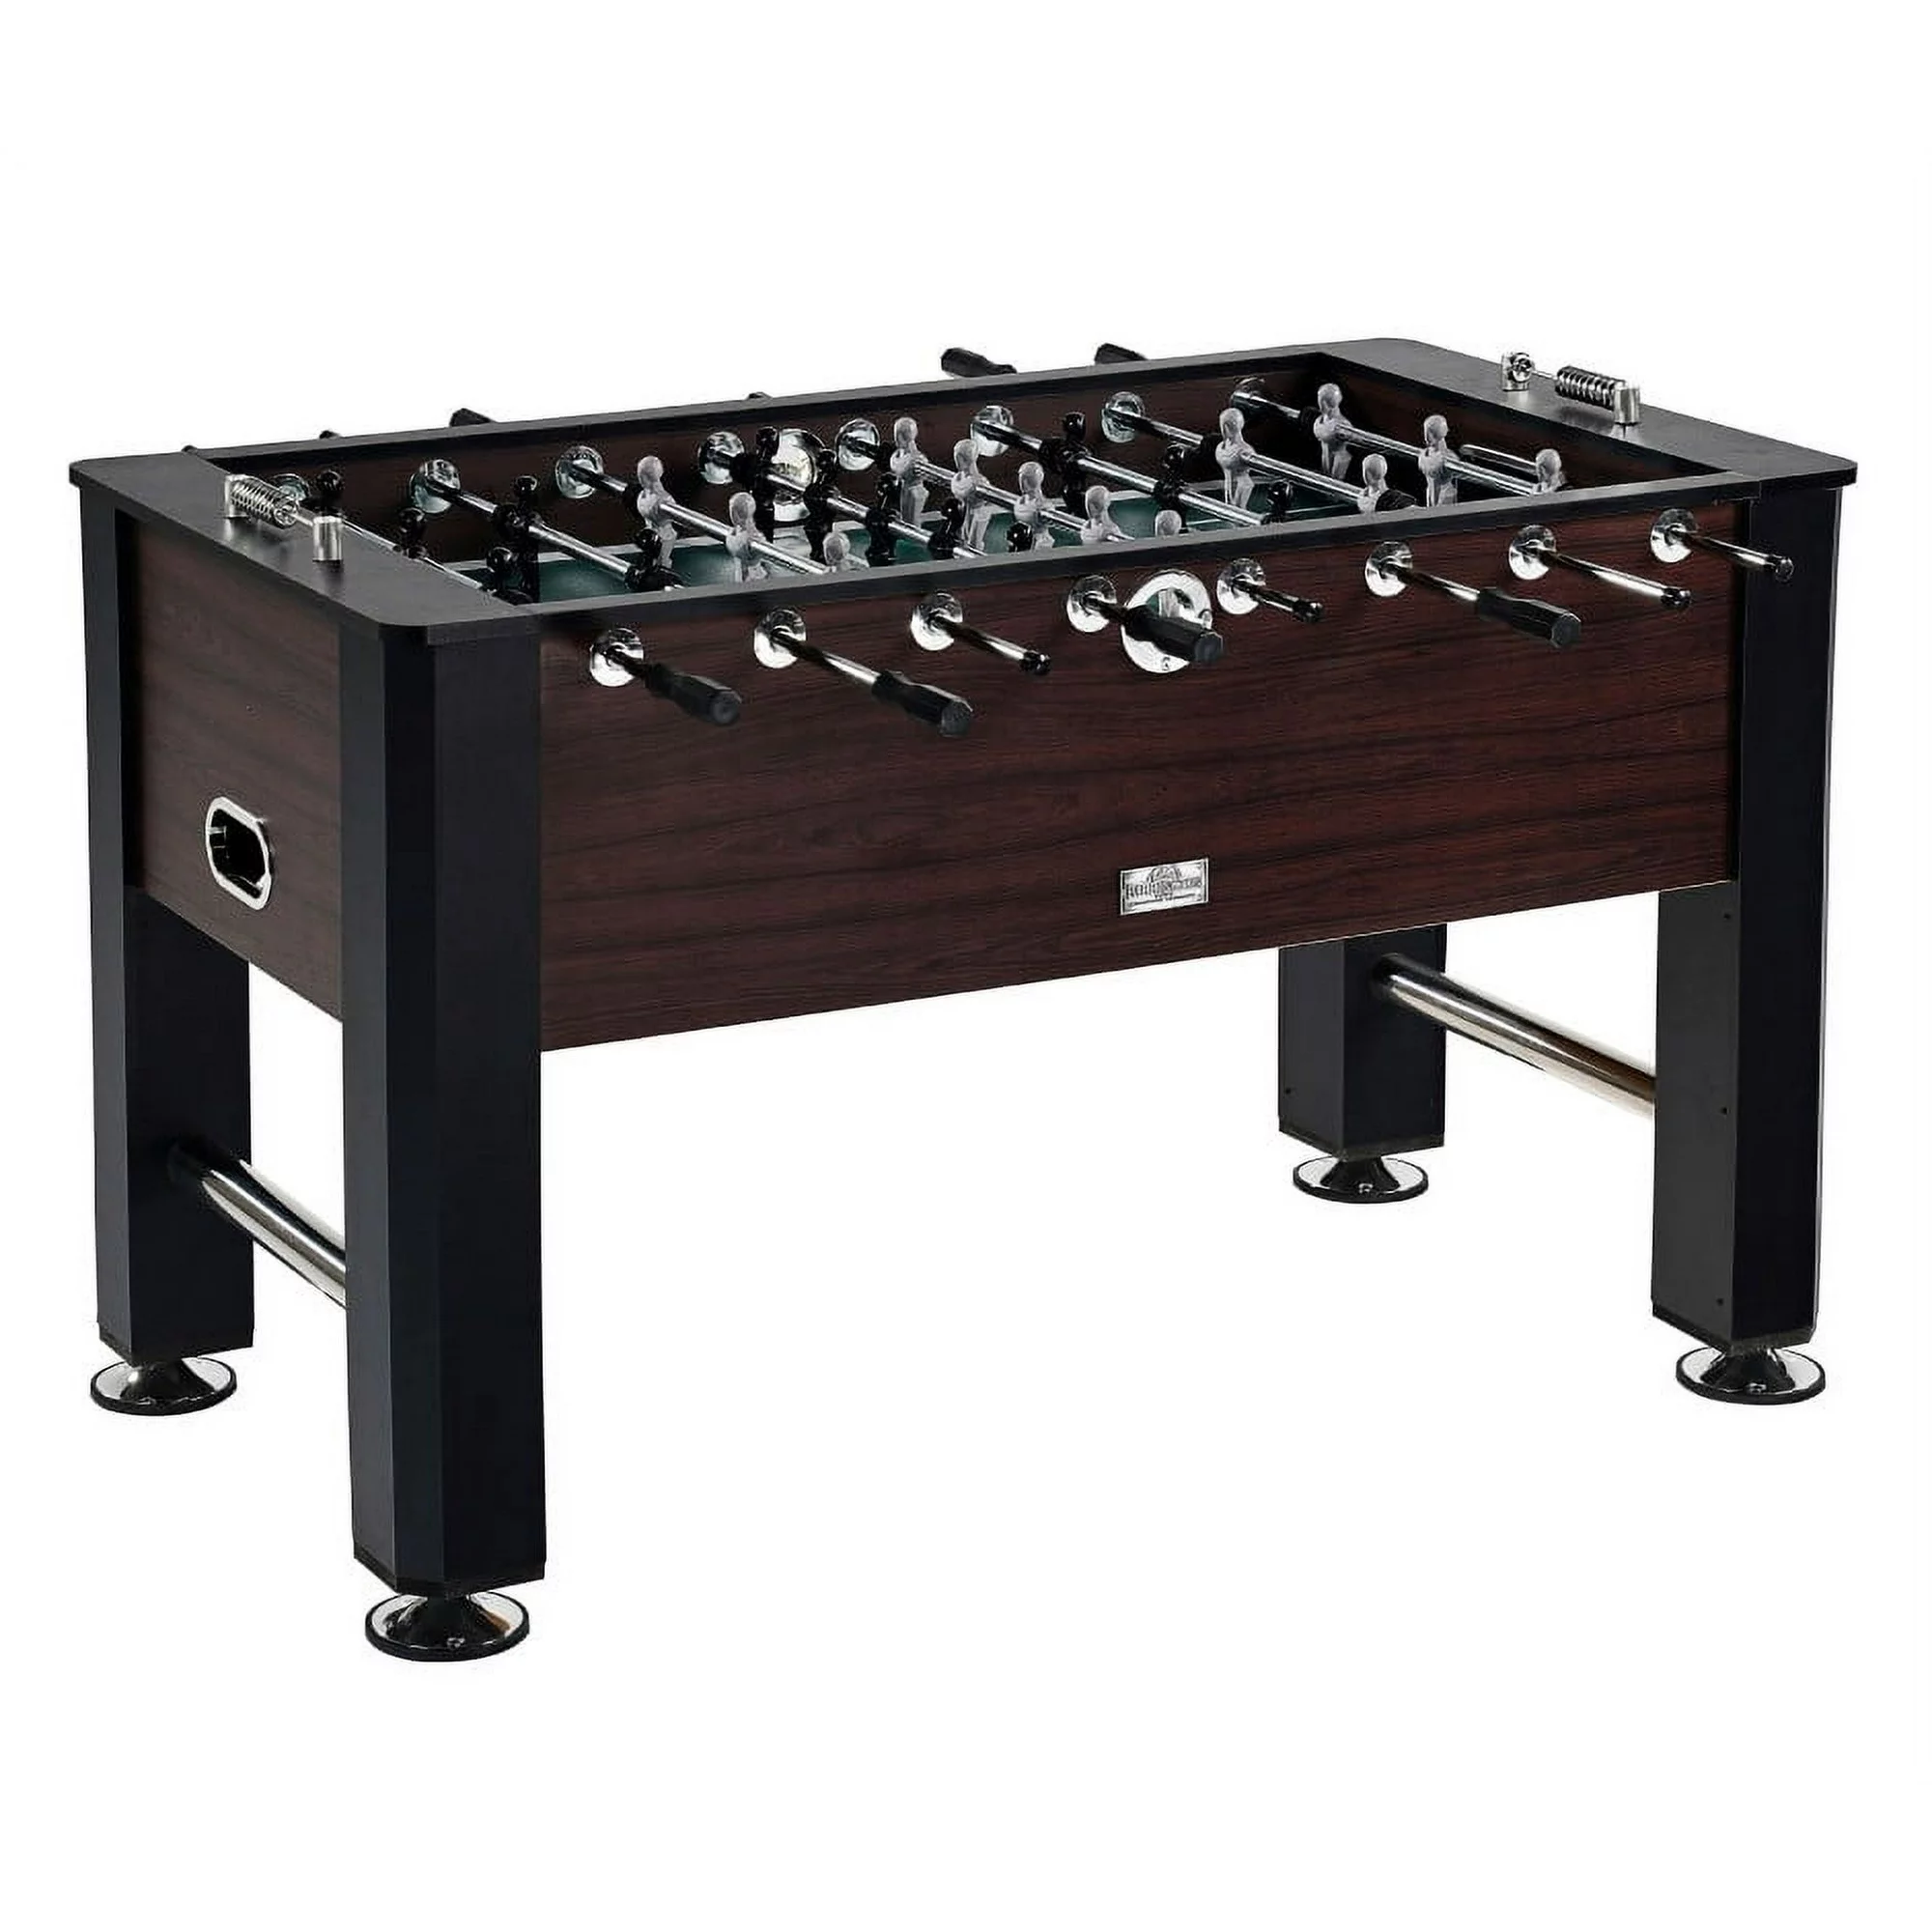 Barrington 56 inch premium furniture foosball soccer table 1 thumb200